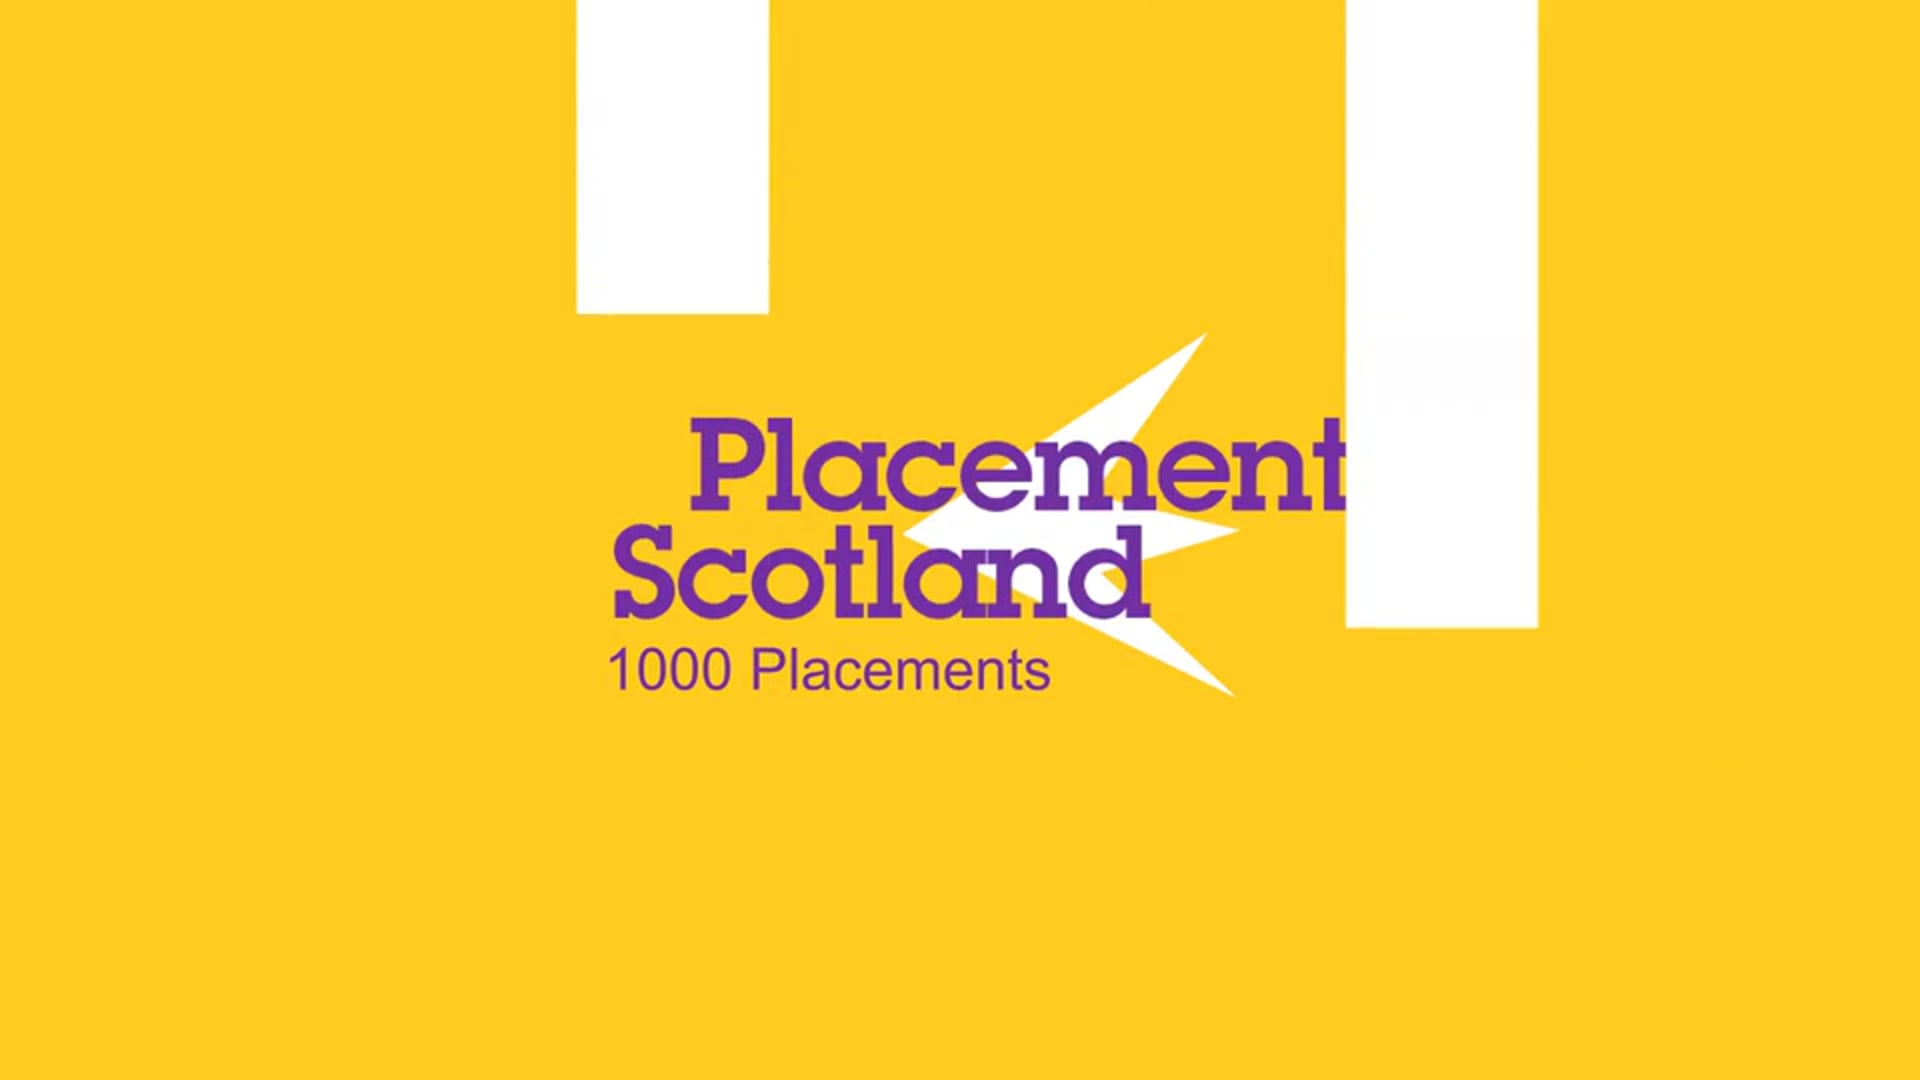 e Placement Scotland Celebrates 1000 Student Placements at The Scottish Parliament